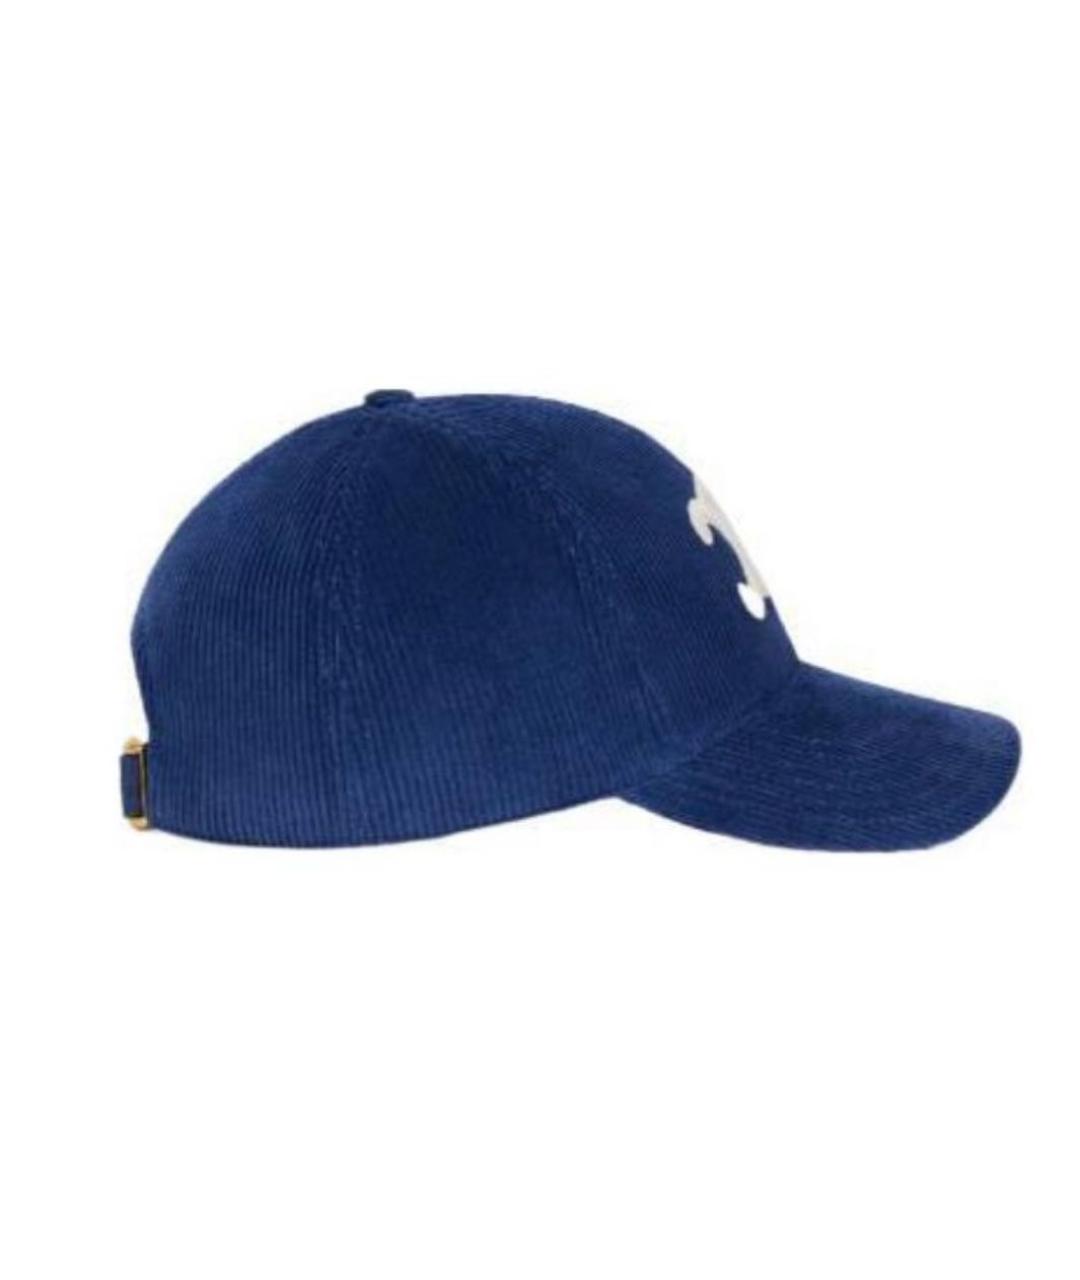 CELINE PRE-OWNED Темно-синяя бархатная кепка, фото 2